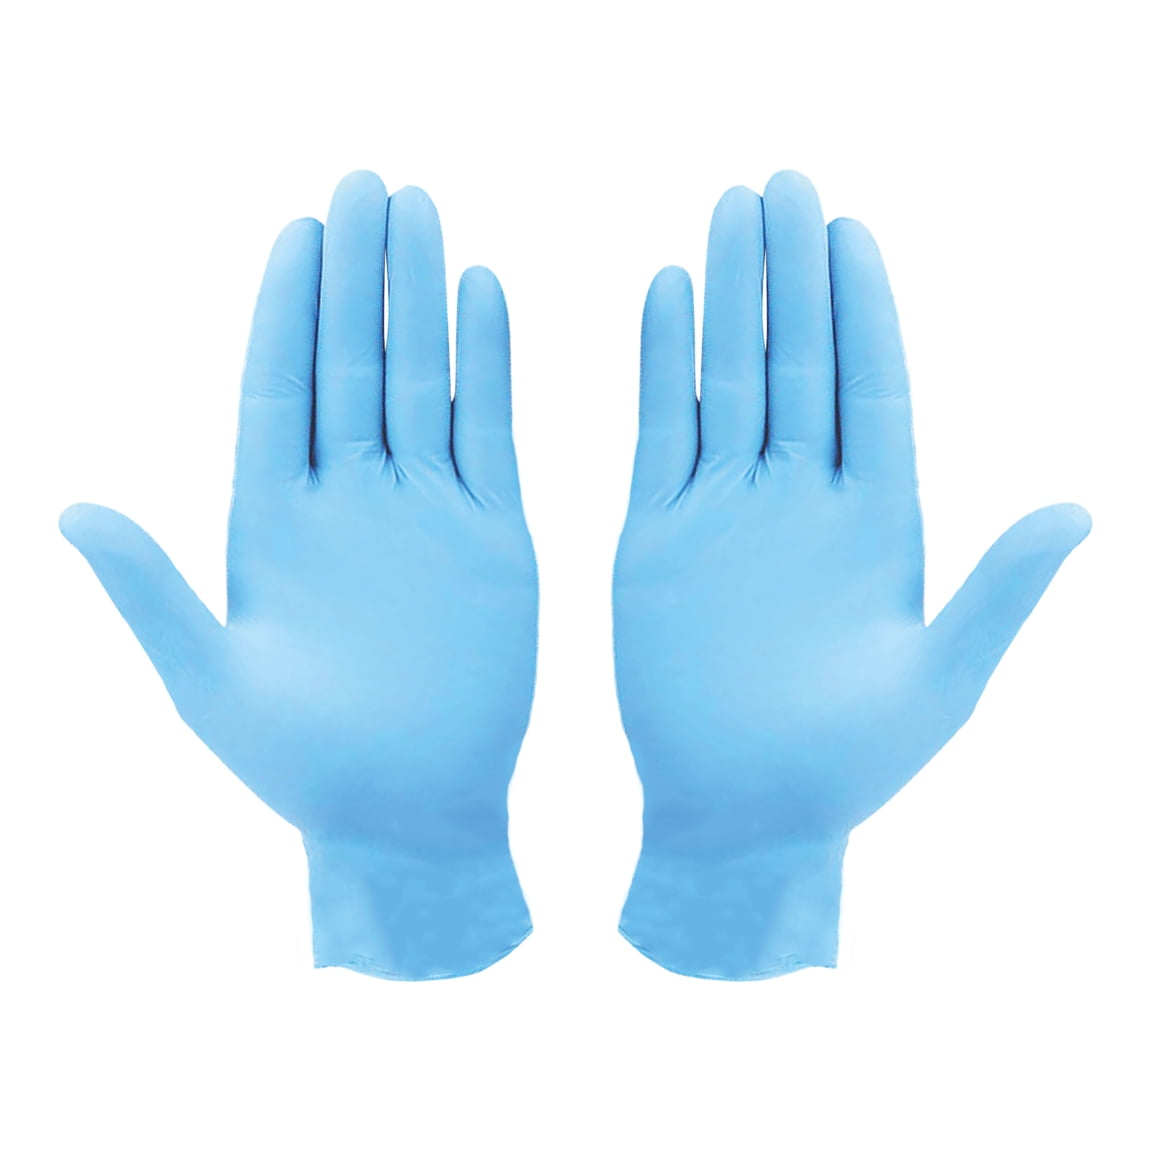 200 Details about   Nitrile Exam Gloves BLUE Powder Free Size MEDIUM 100 1000 500